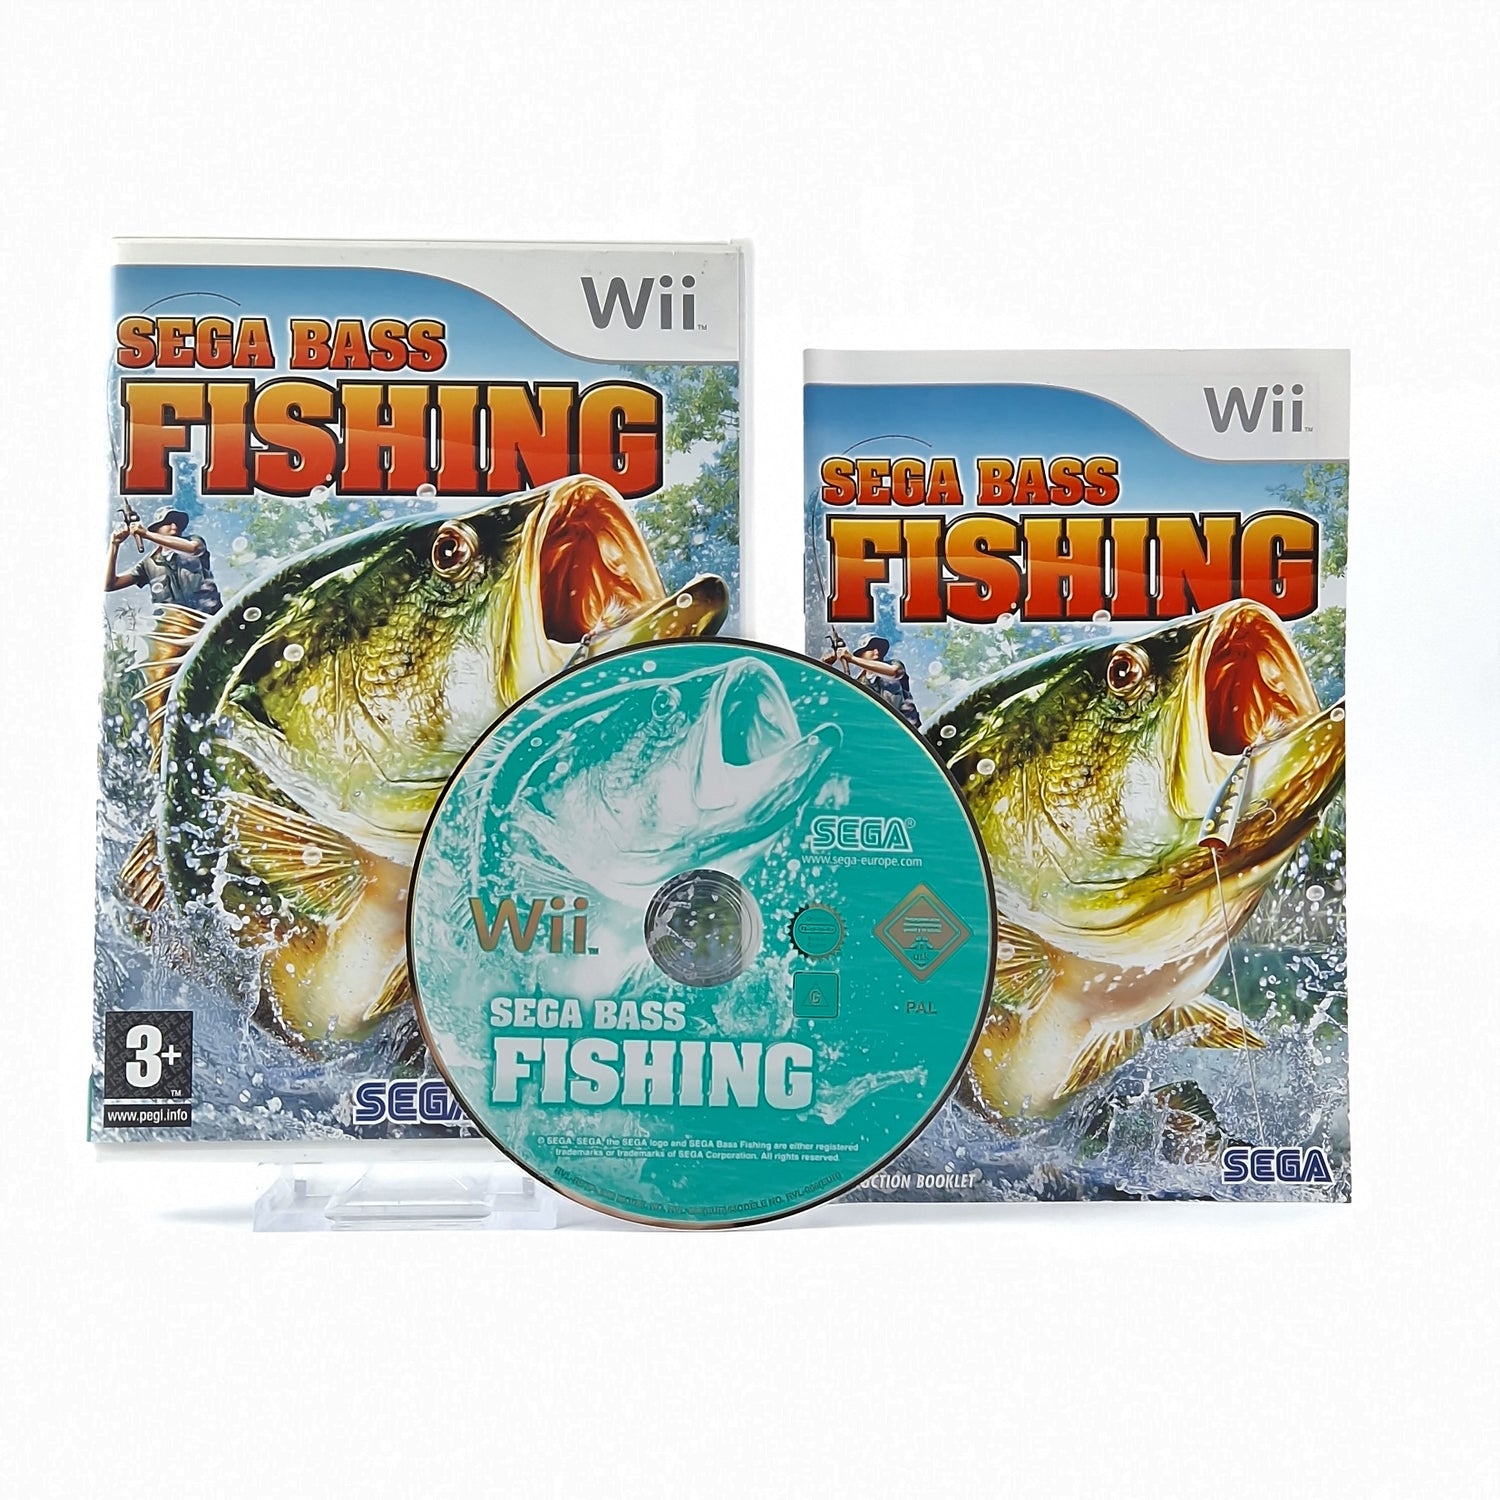 Nintendo Wii Game: Sega Bass Fishing - OVP Instructions CD Pal Disk